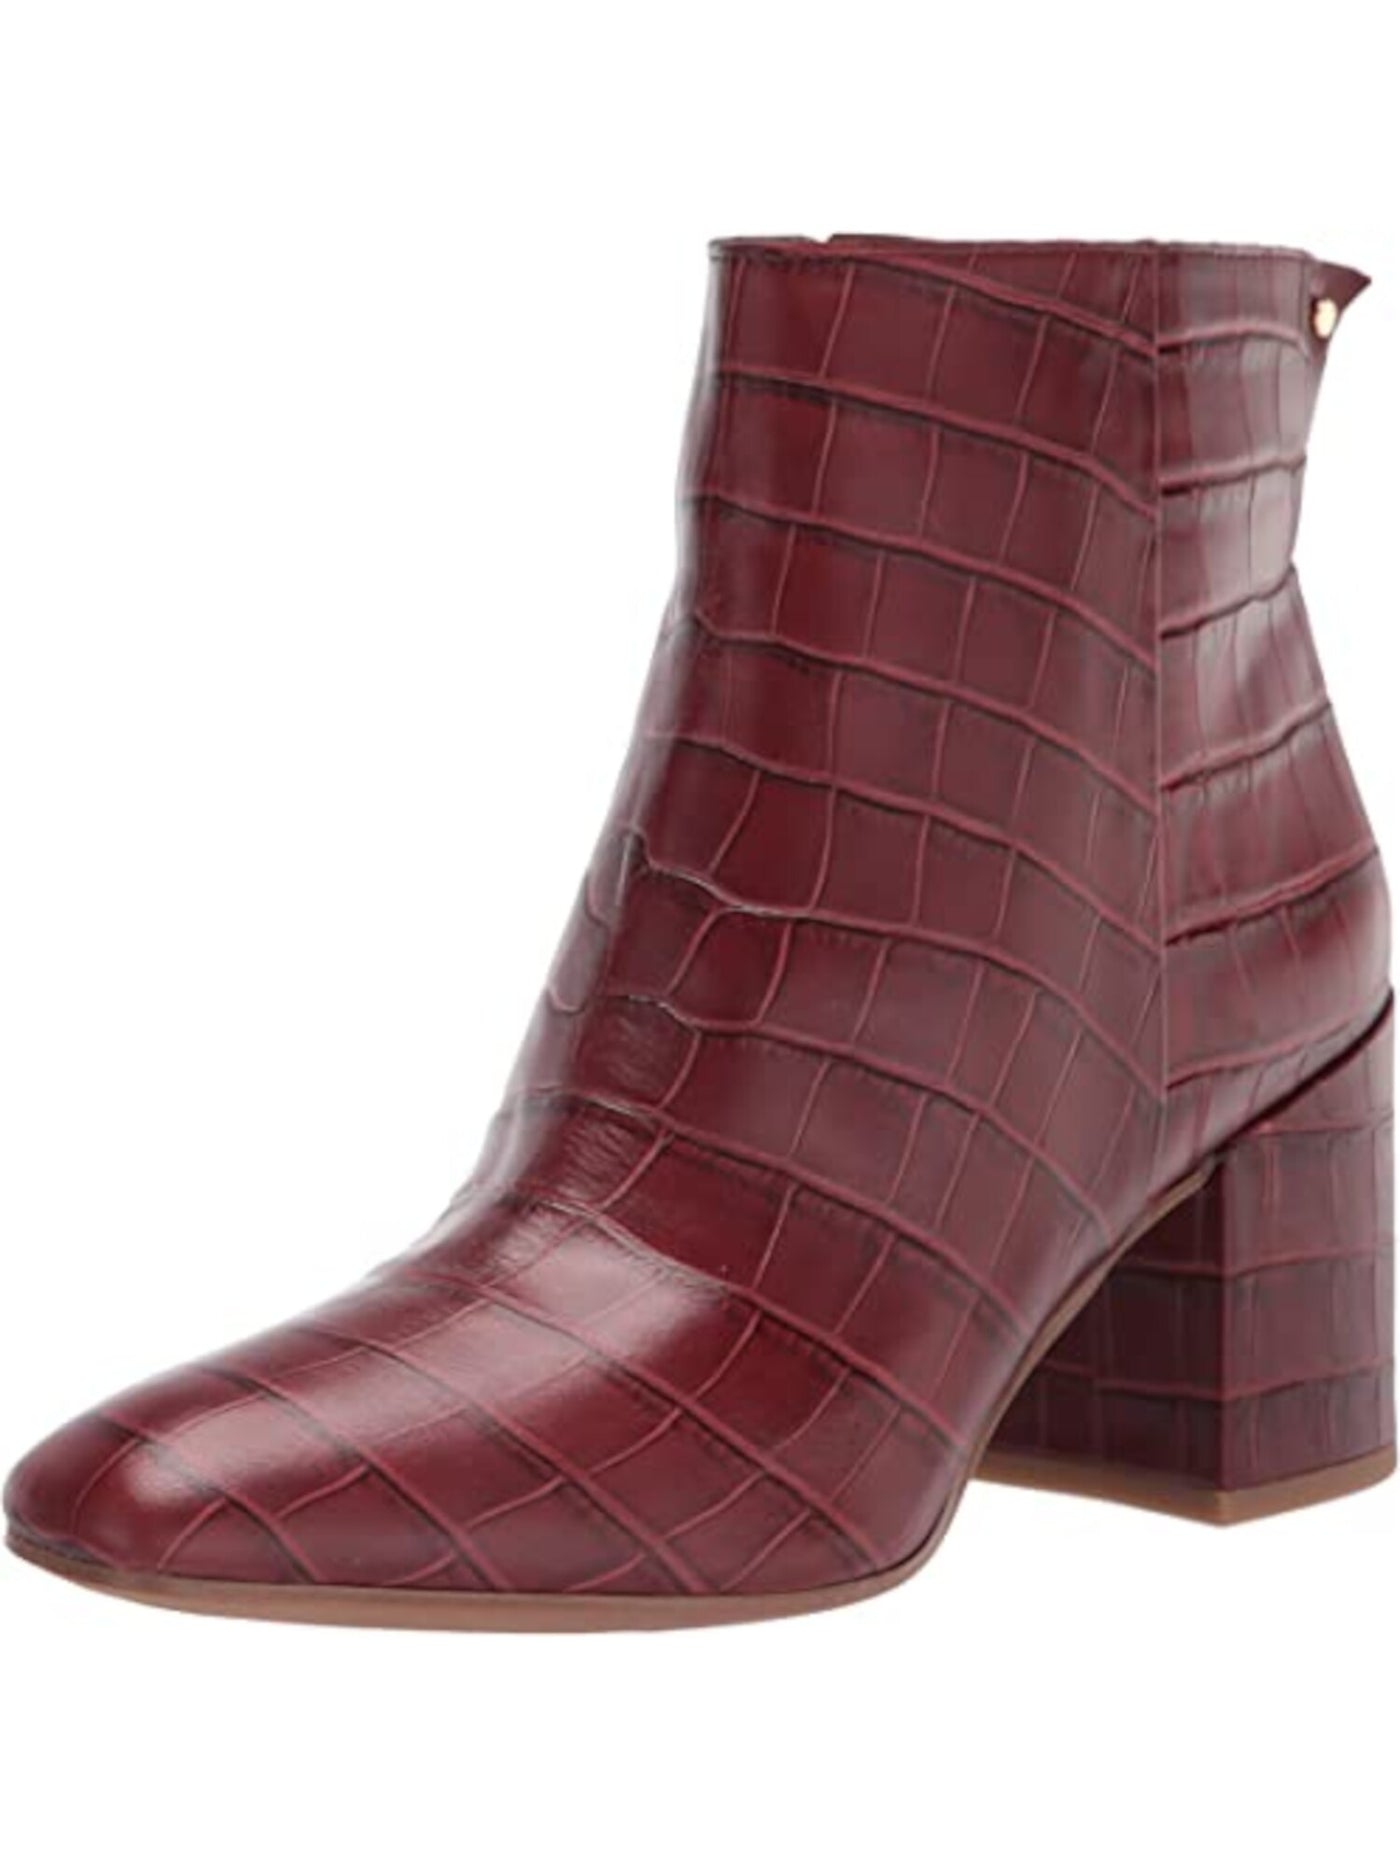 FRANCO SARTO Womens Maroon Crocodile Padded Studded Tina Square Toe Block Heel Zip-Up Leather Booties 7.5 M